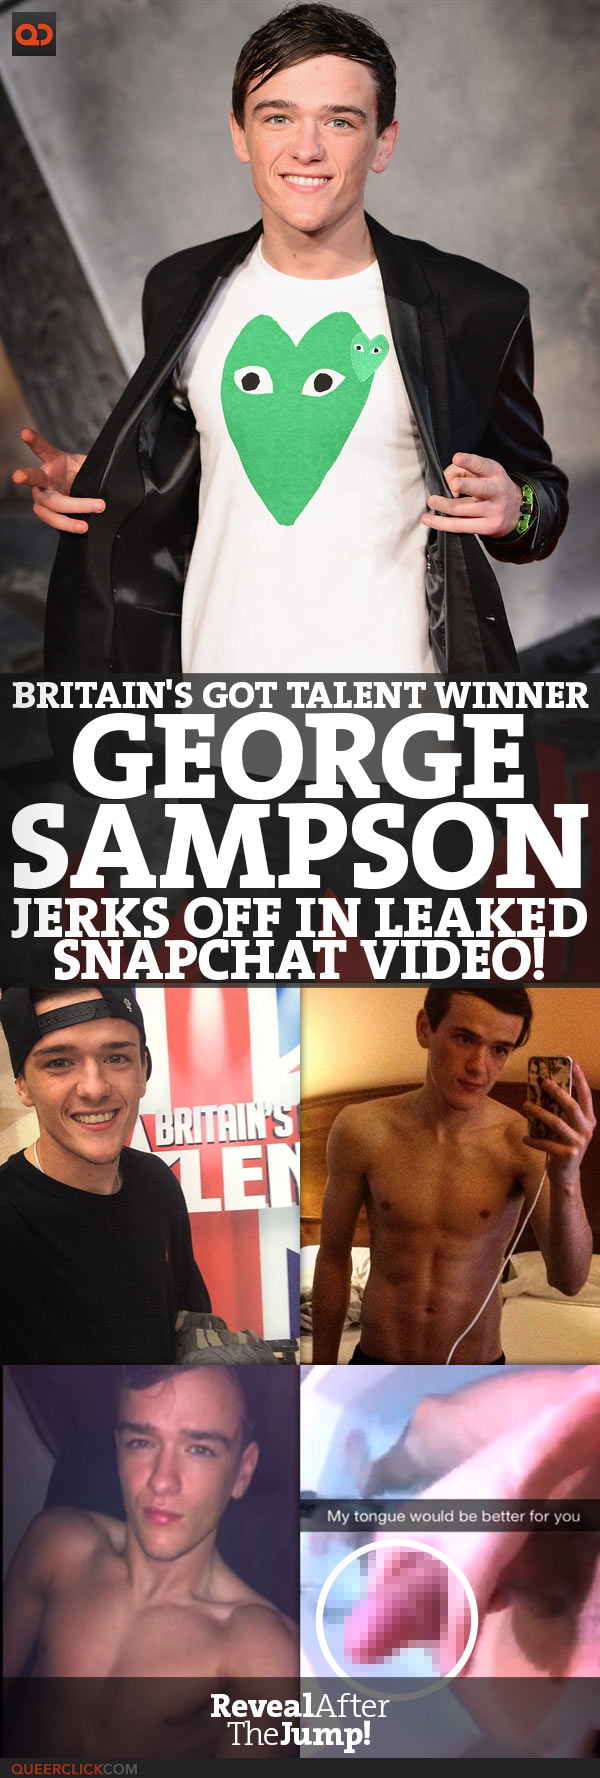 George Sampson, Britain's Got Talent Winner, Jeks Off In Leaked Snapchat Video!